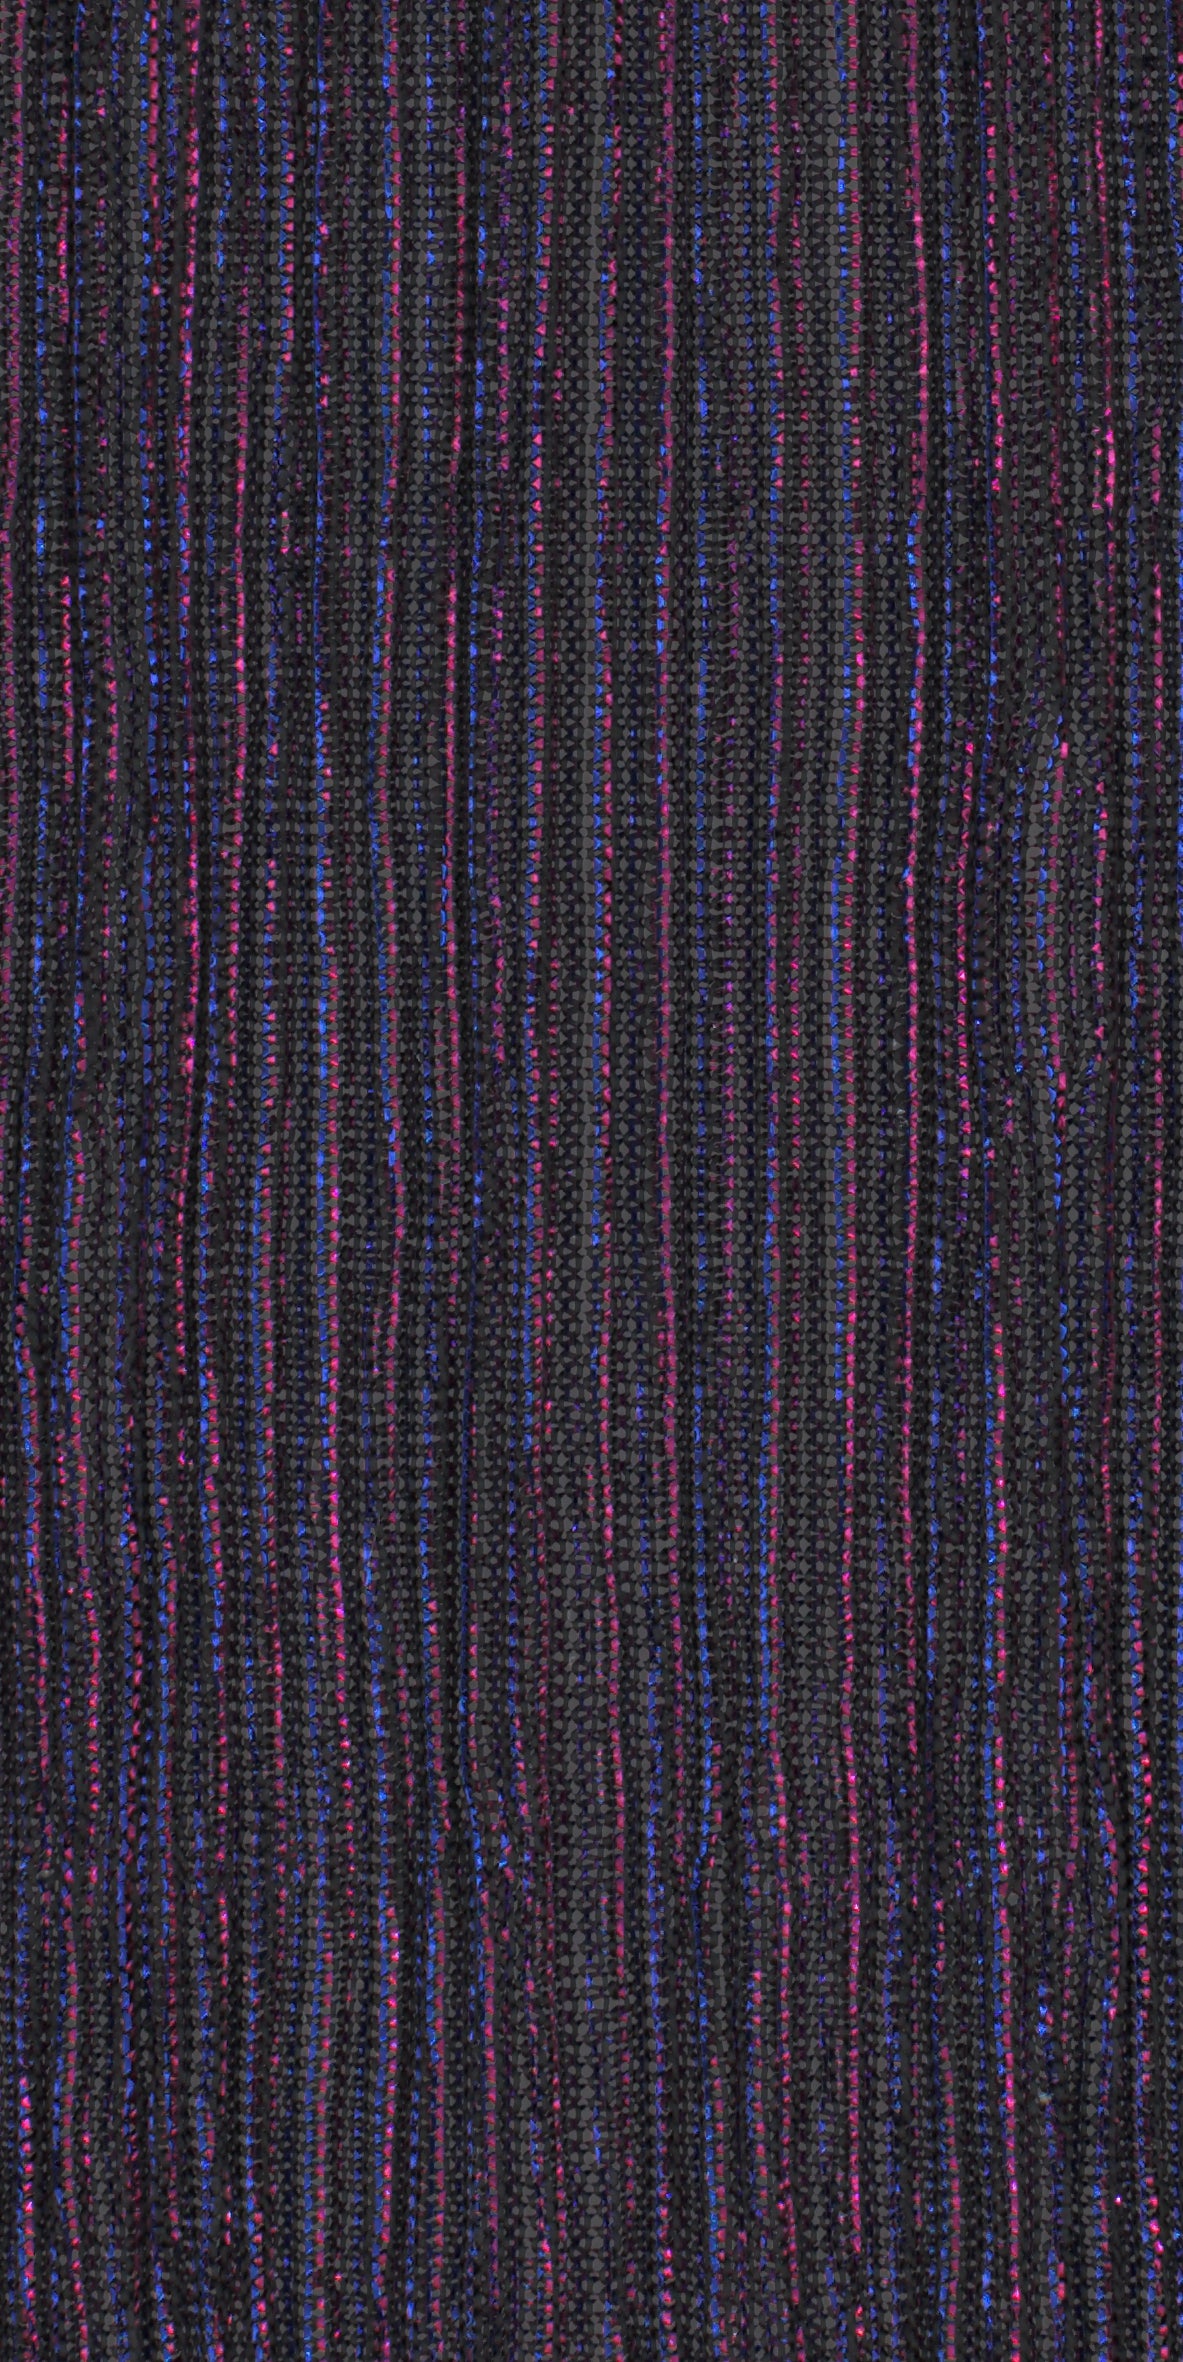 12006-22 Black Blue Red Metallic Pleat Plain Dyed Blend 126g/yd 56&quot; black blend blue knit metallic plain dyed pleat ppl new red Metallic, Pleat - knit fabric - woven fabric - fabric company - fabric wholesale - fabric b2b - fabric factory - high quality fabric - hong kong fabric - fabric hk - acetate fabric - cotton fabric - linen fabric - metallic fabric - nylon fabric - polyester fabric - spandex fabric - chun wing hing - cwh hk - fabric worldwide ship - 針織布 - 梳織布 - 布料公司- 布料批發 - 香港布料 - 秦榮興